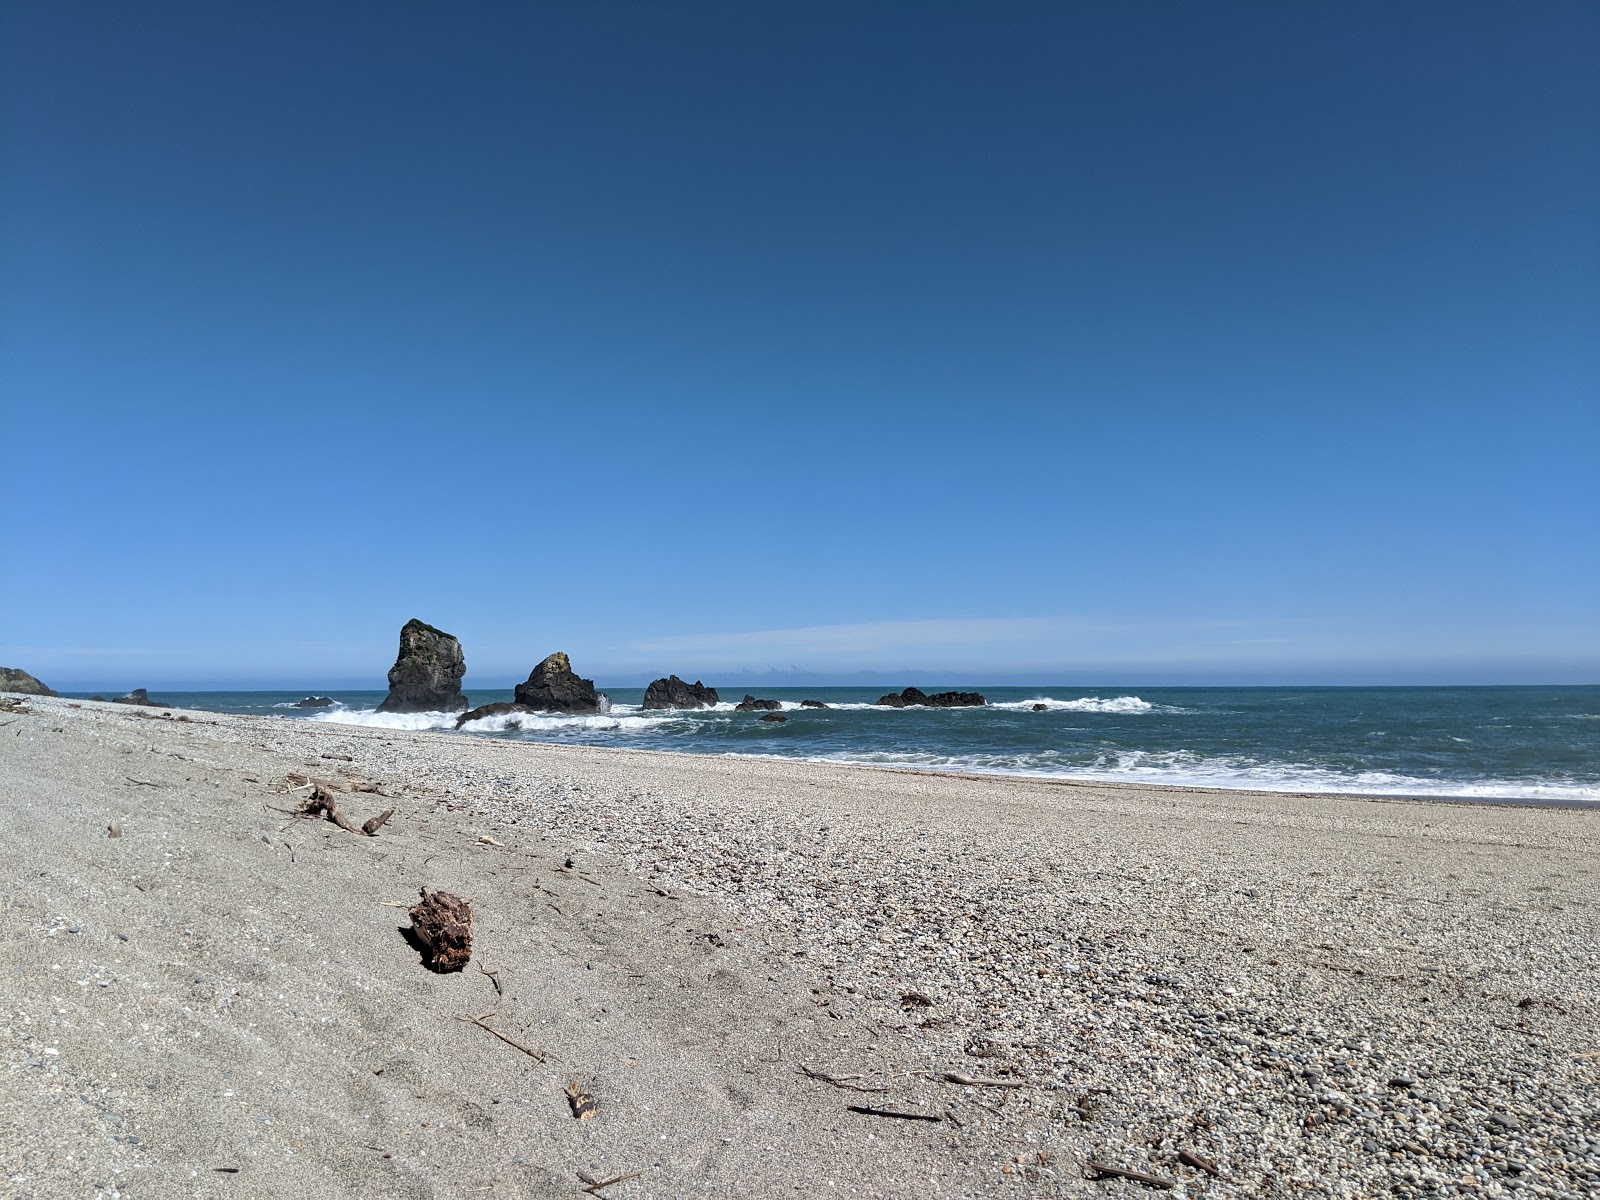 Fotografija Monro Beach z sivi fini kamenček površino